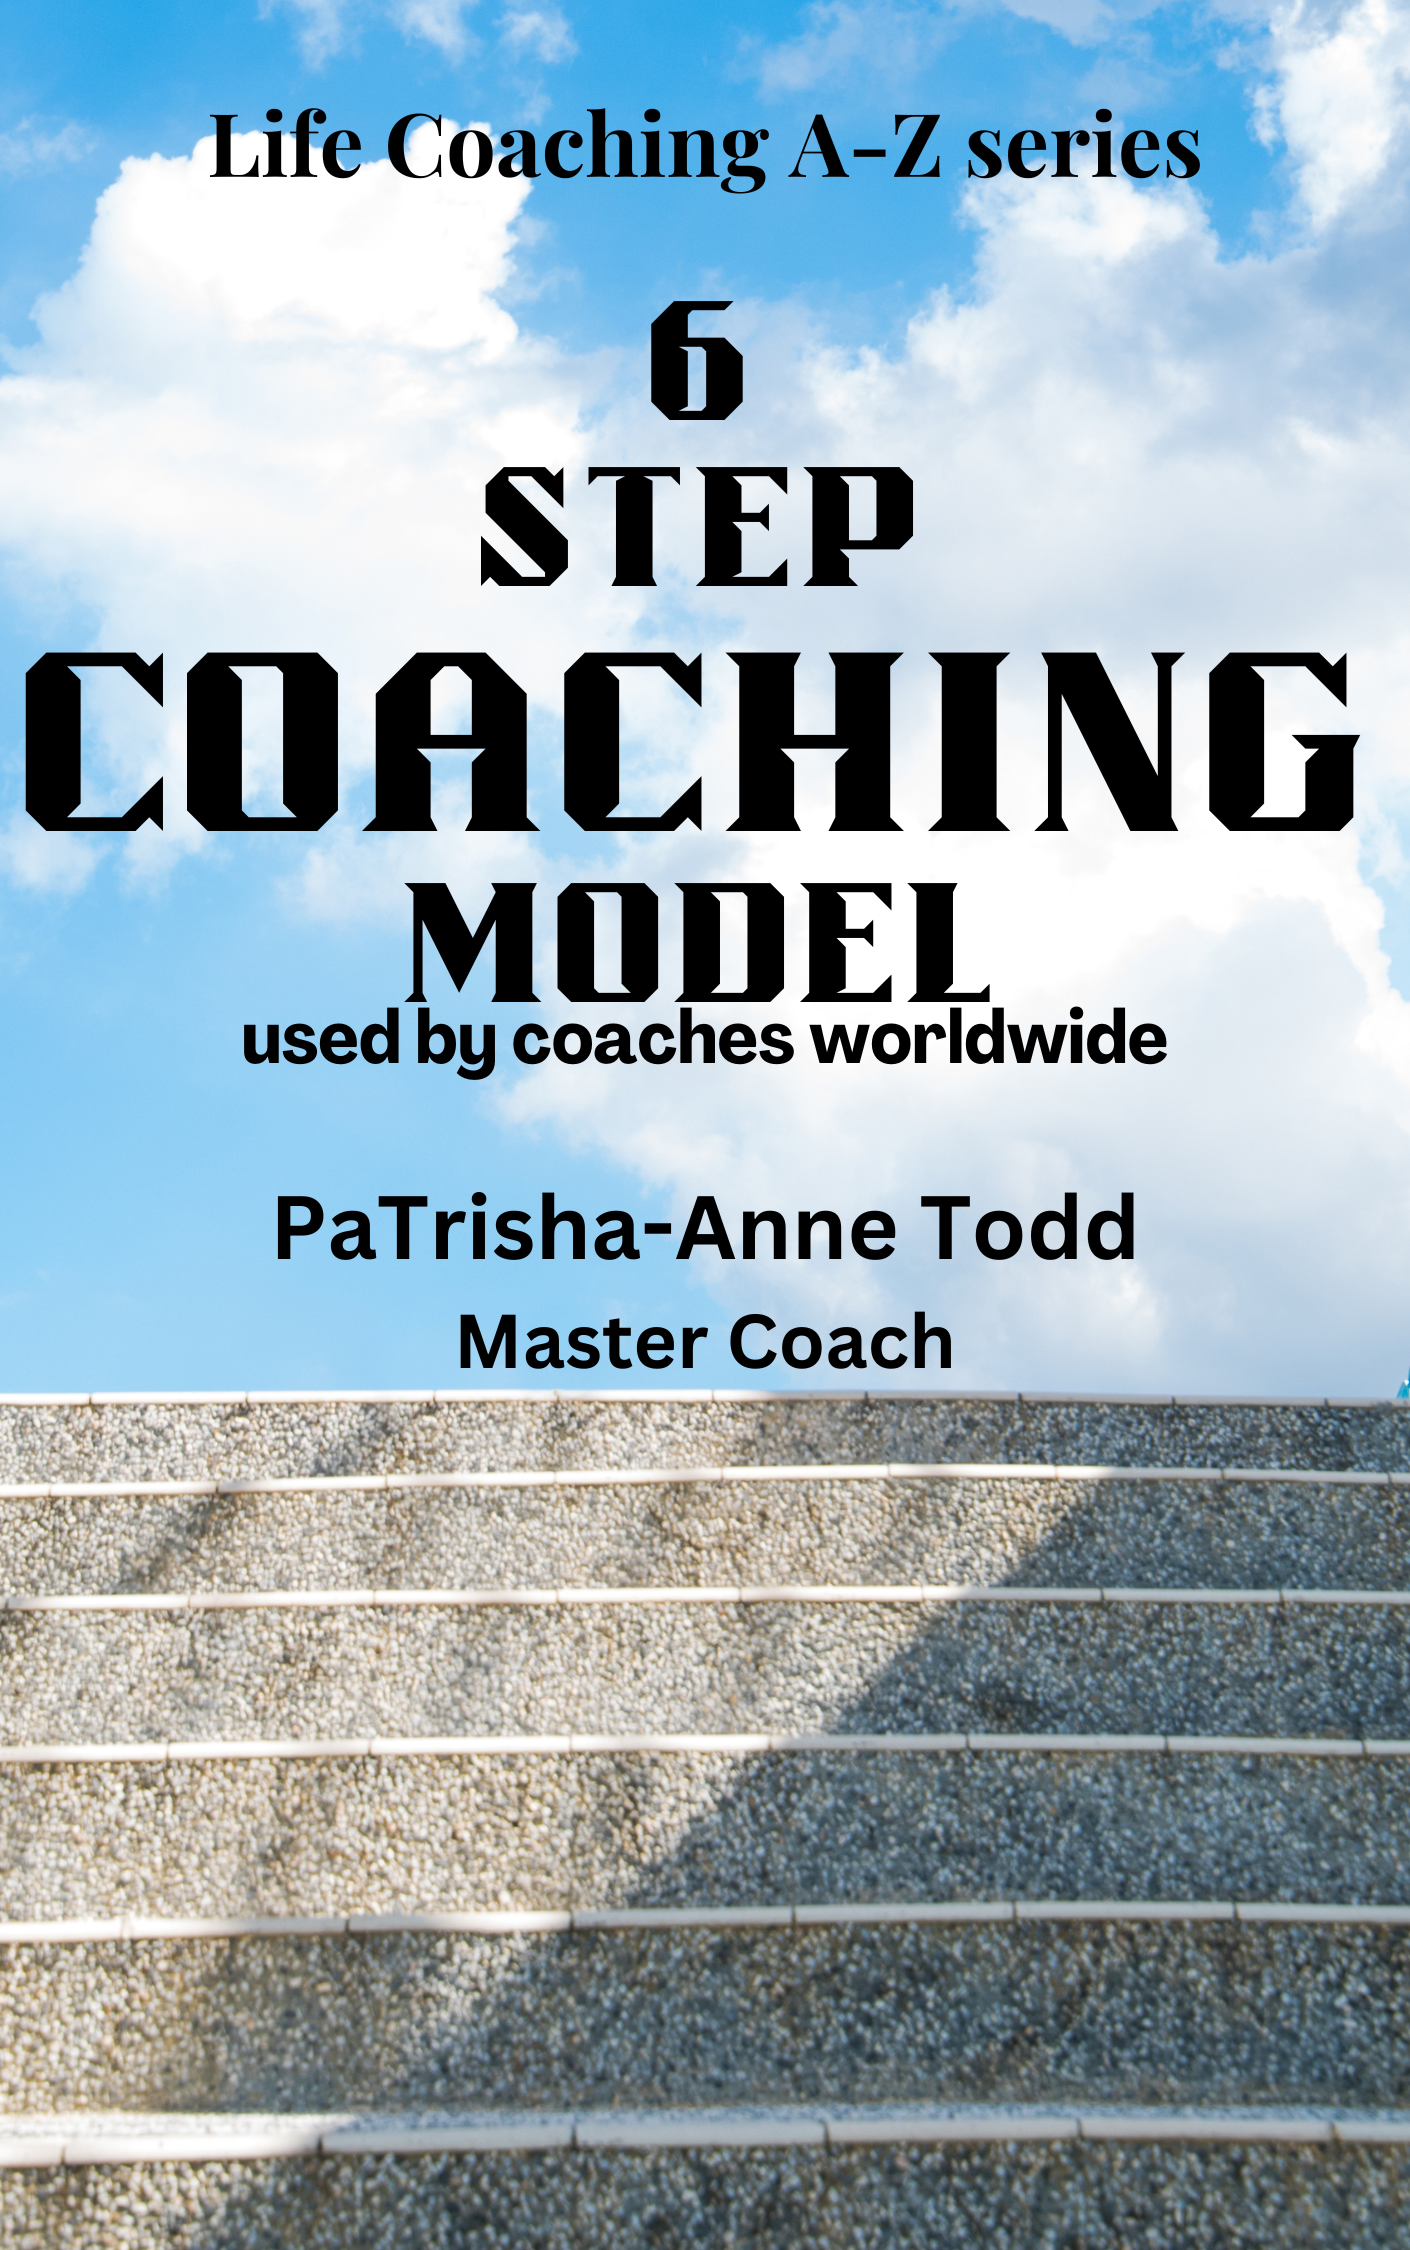 6 Step Coaching Model by Master Coach PaTrisha-Anne Todd